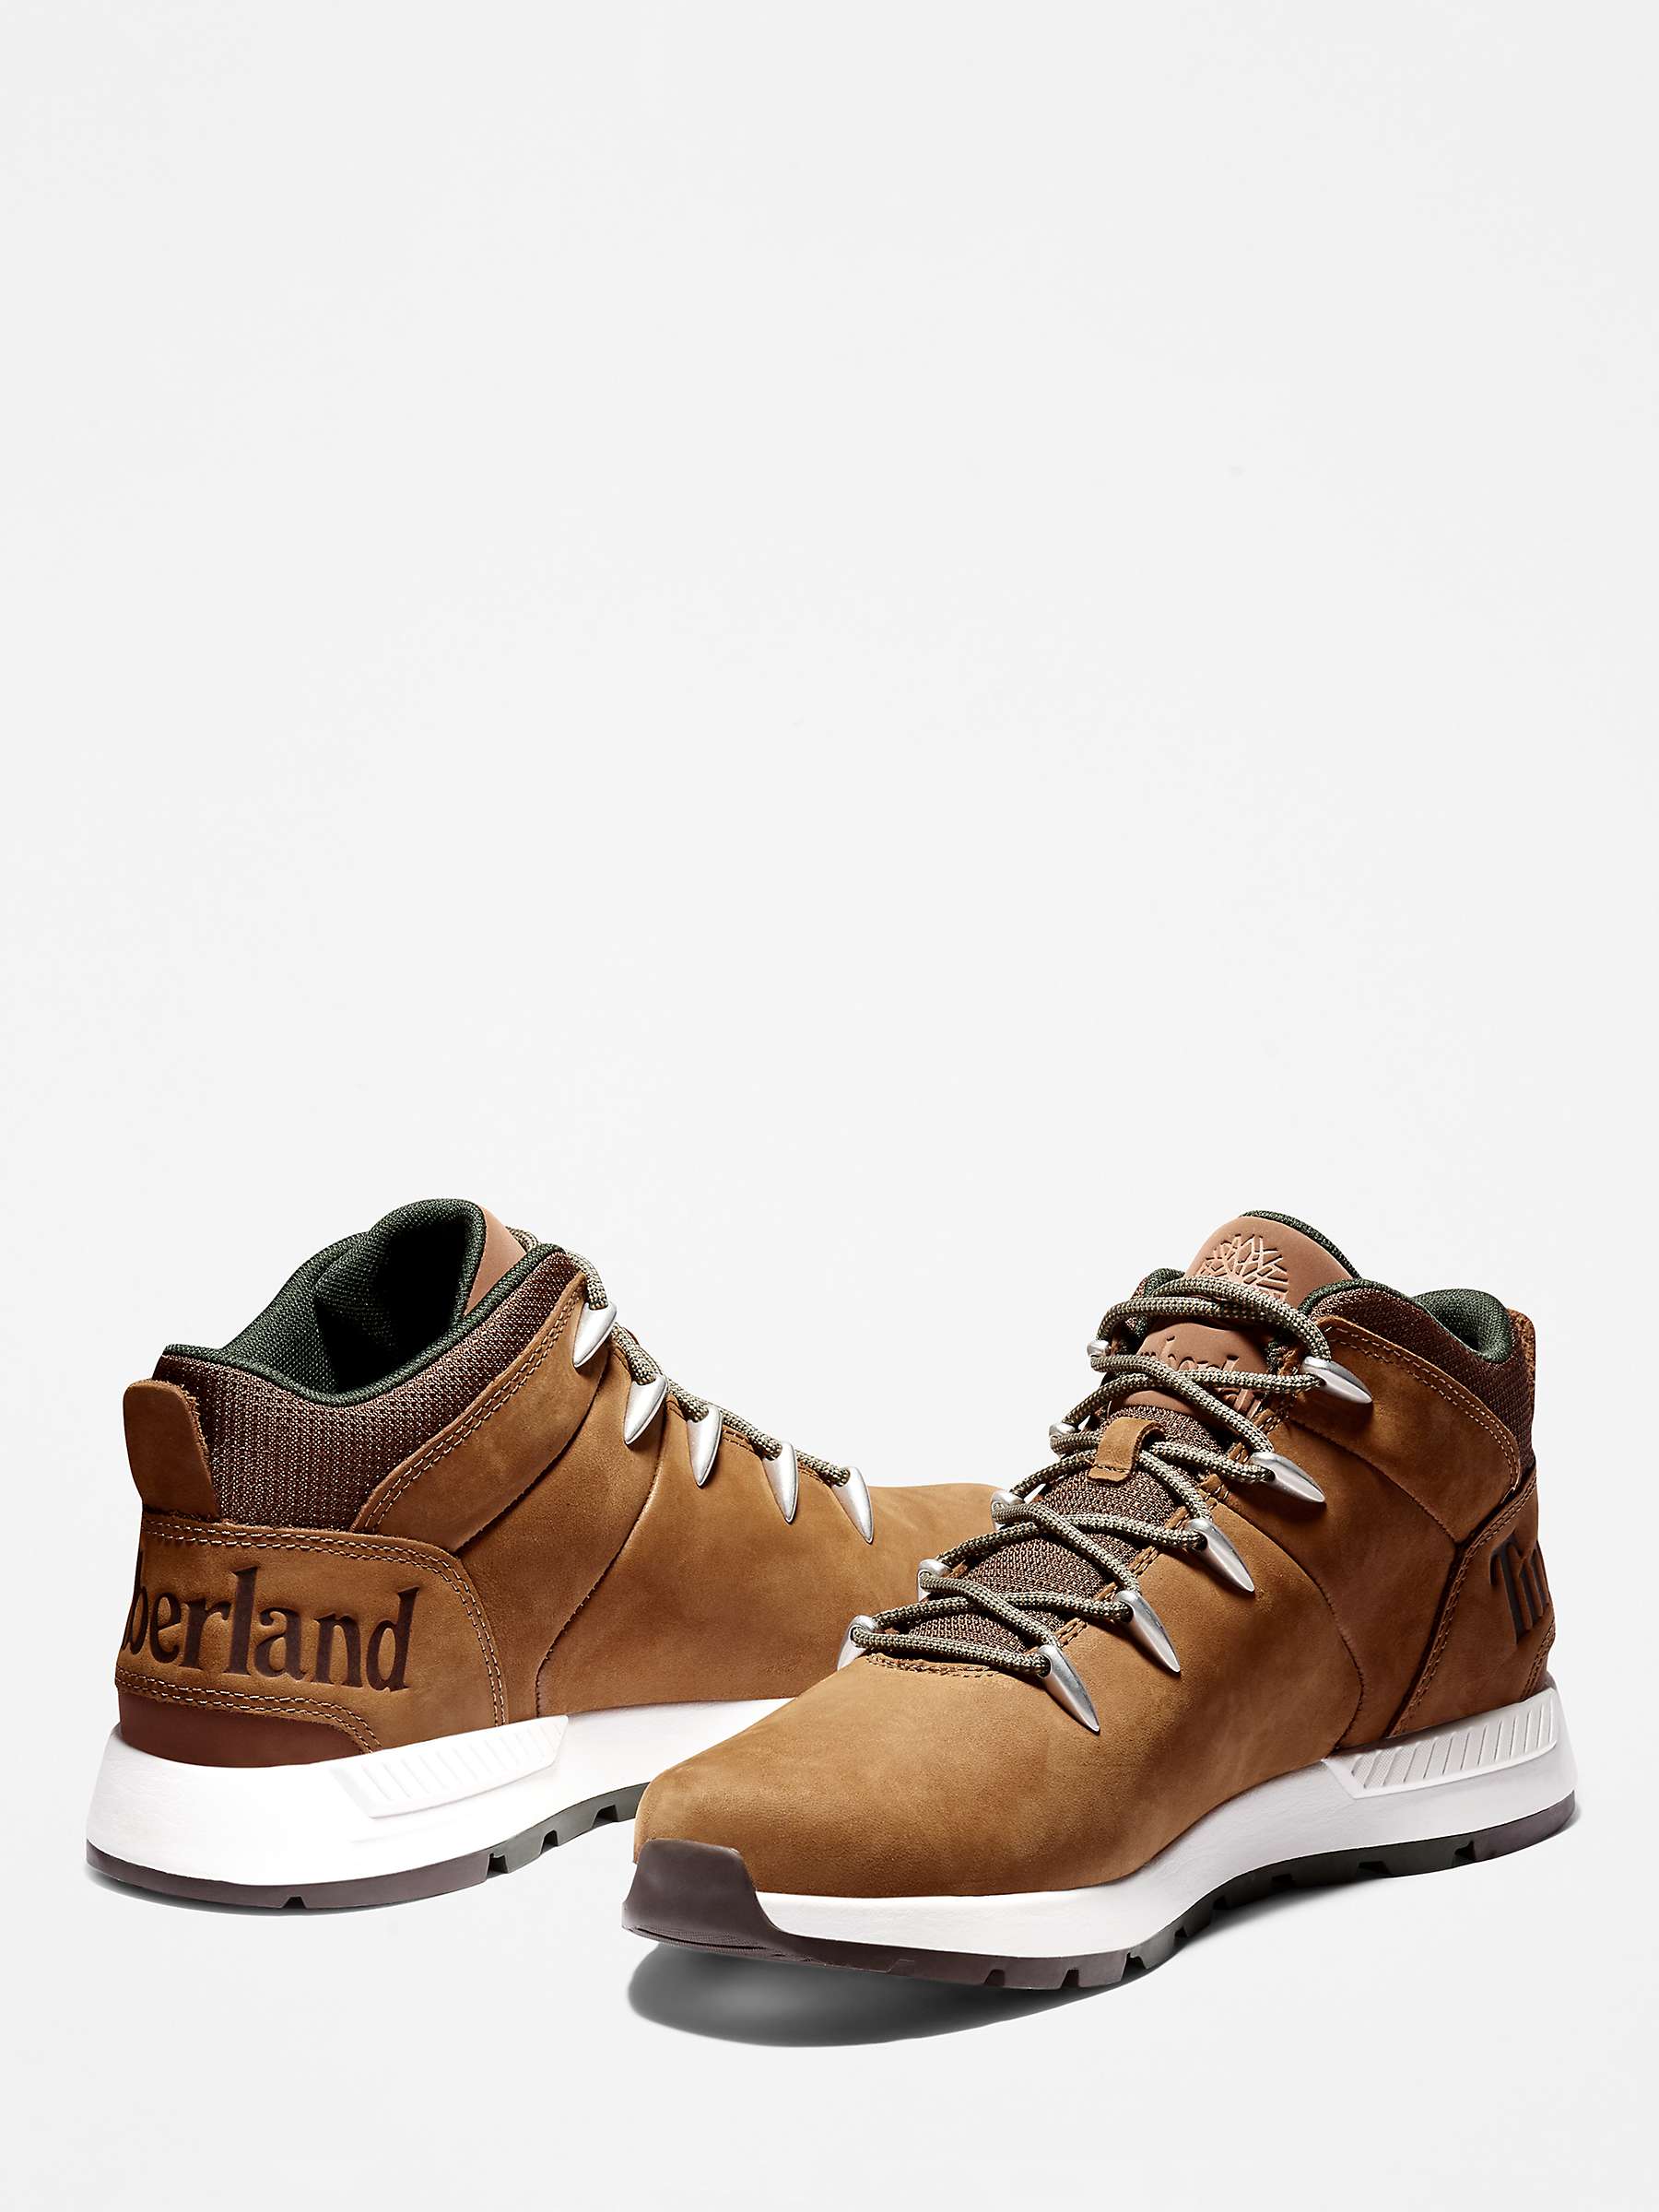 Buy Timberland Sprint Trekker Leather Boots, Rust Online at johnlewis.com